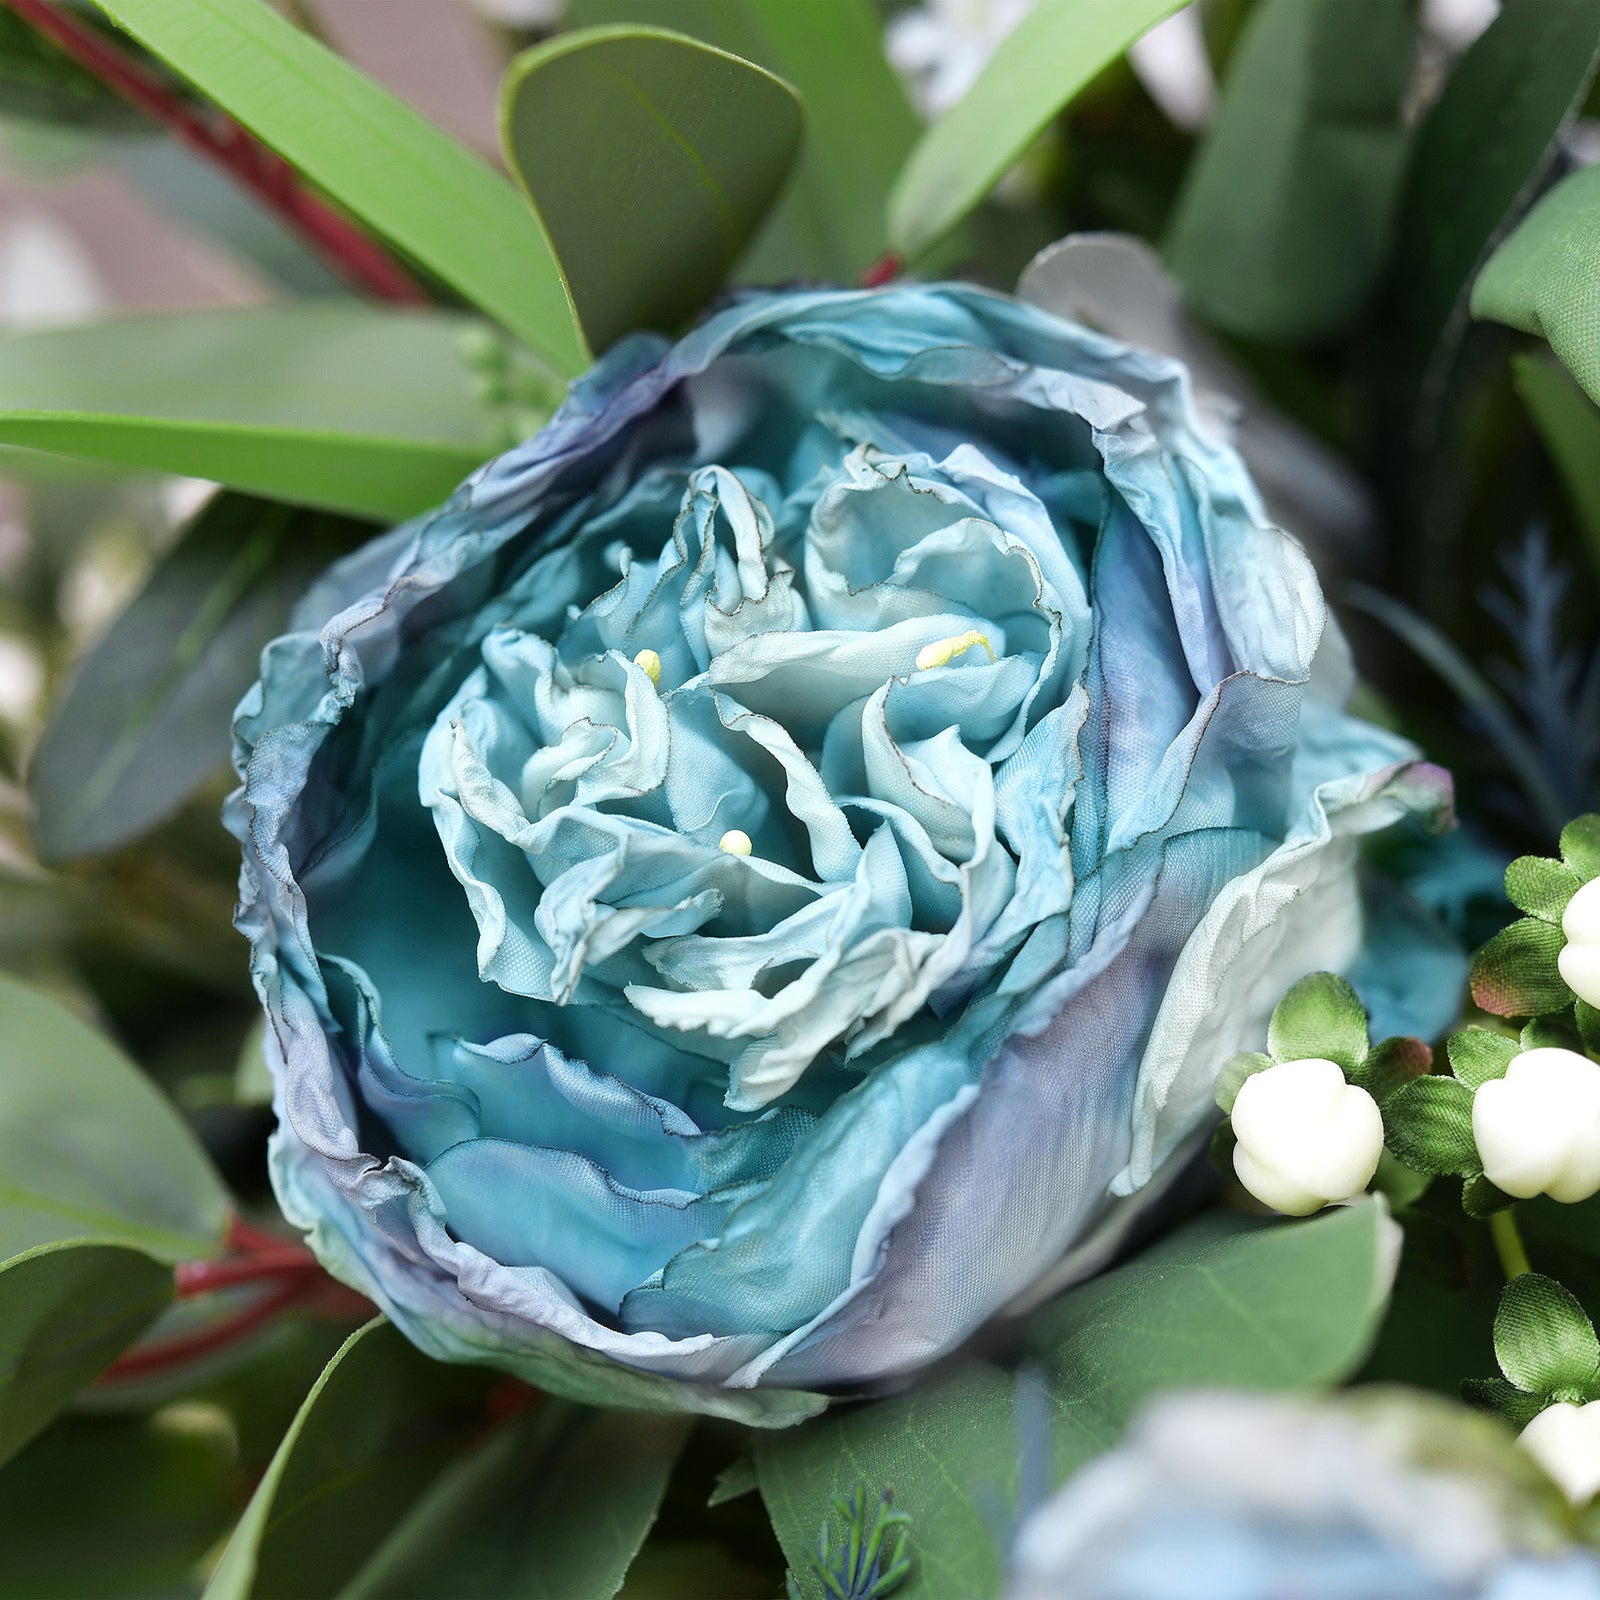 Dusty Blue Nostalgic Sentimental Rustic Vintage Silk Peony Artificial Flower Bouquet 6 Stems